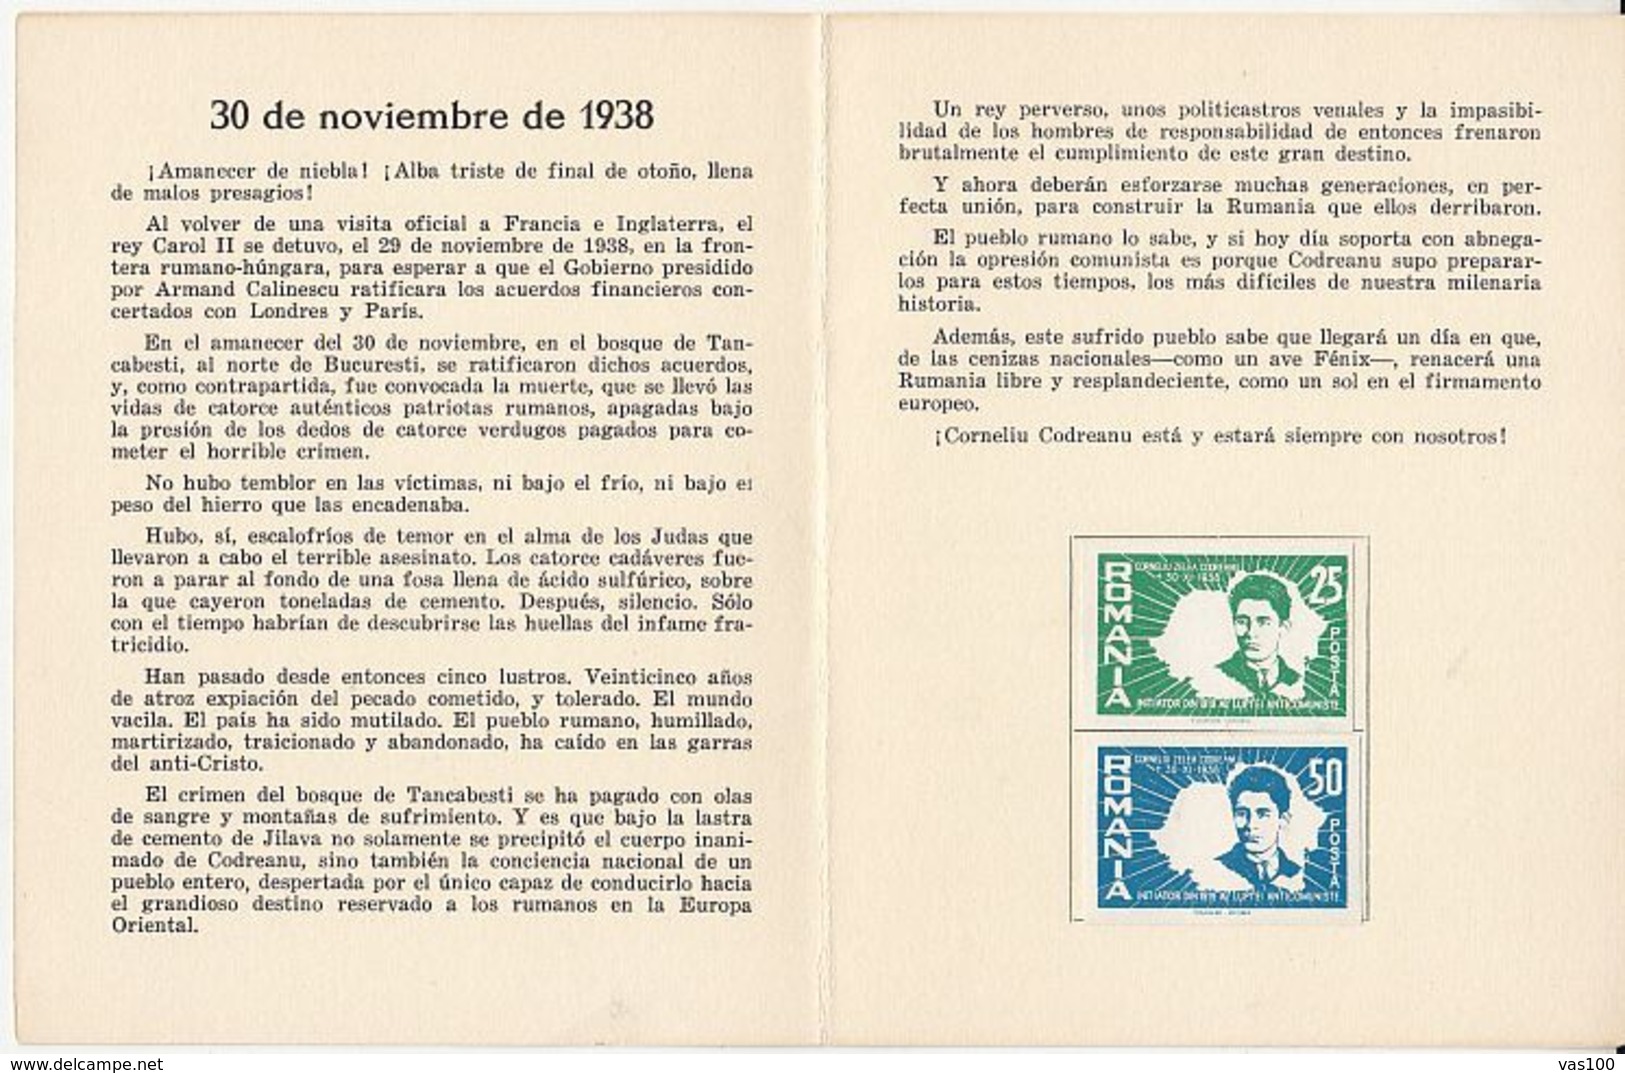 IN MEMORIAM CORNELIU ZELEA CODREANU, IRON GUARD LEADER, BOOKLET, ROMANIAN EXILE IN SPAIN, 1963, ROMANIA - Booklets